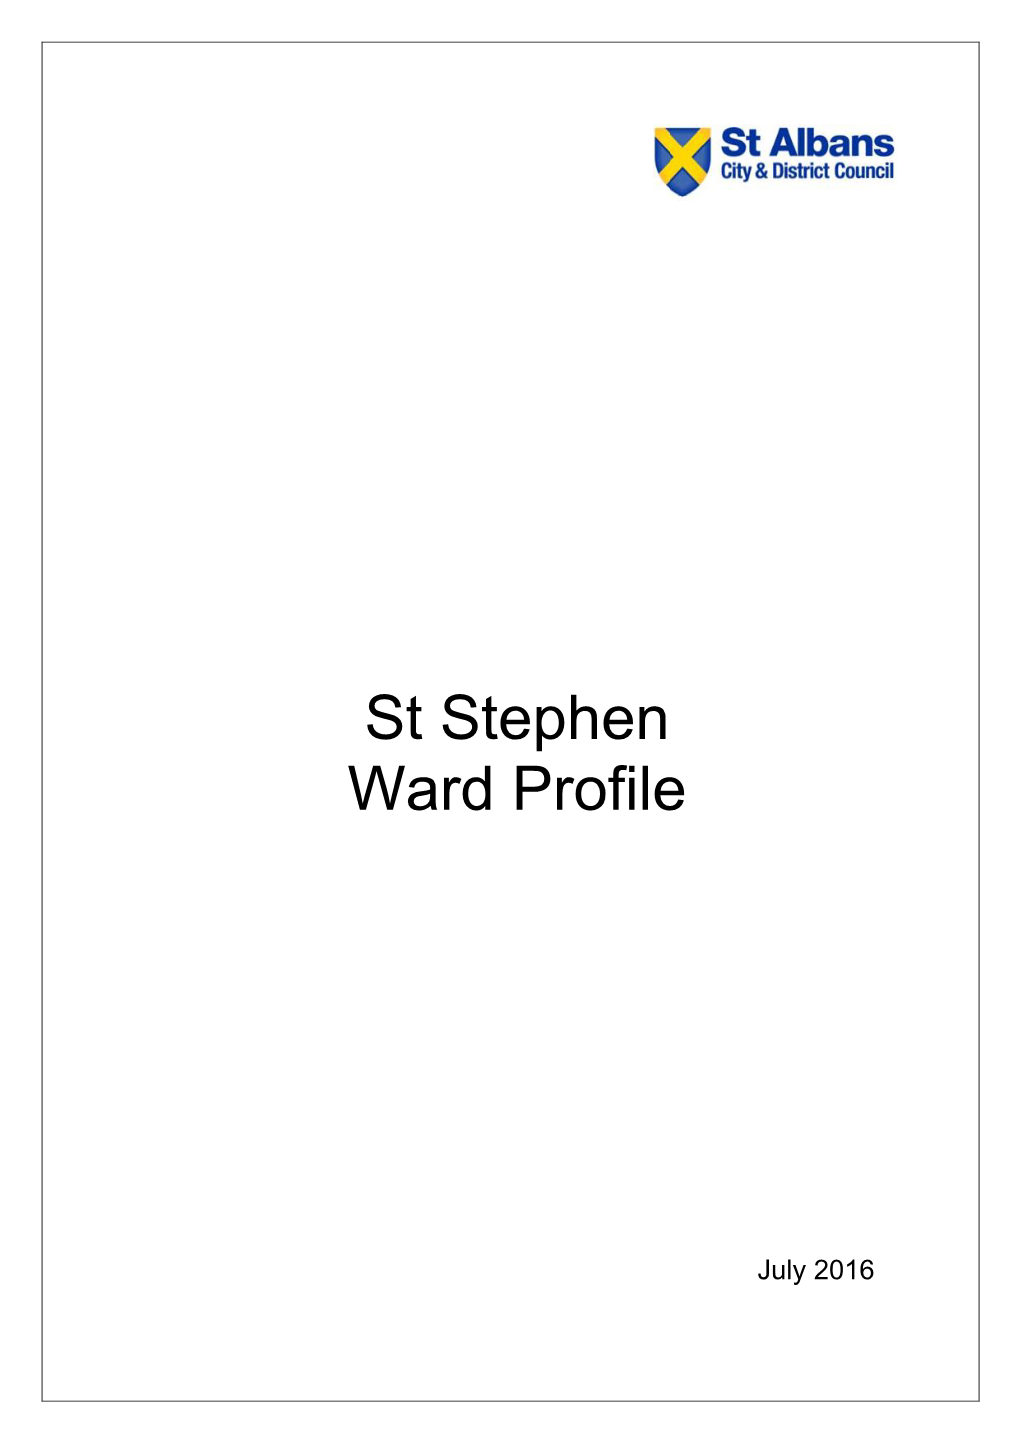 St Stephen Ward Profile